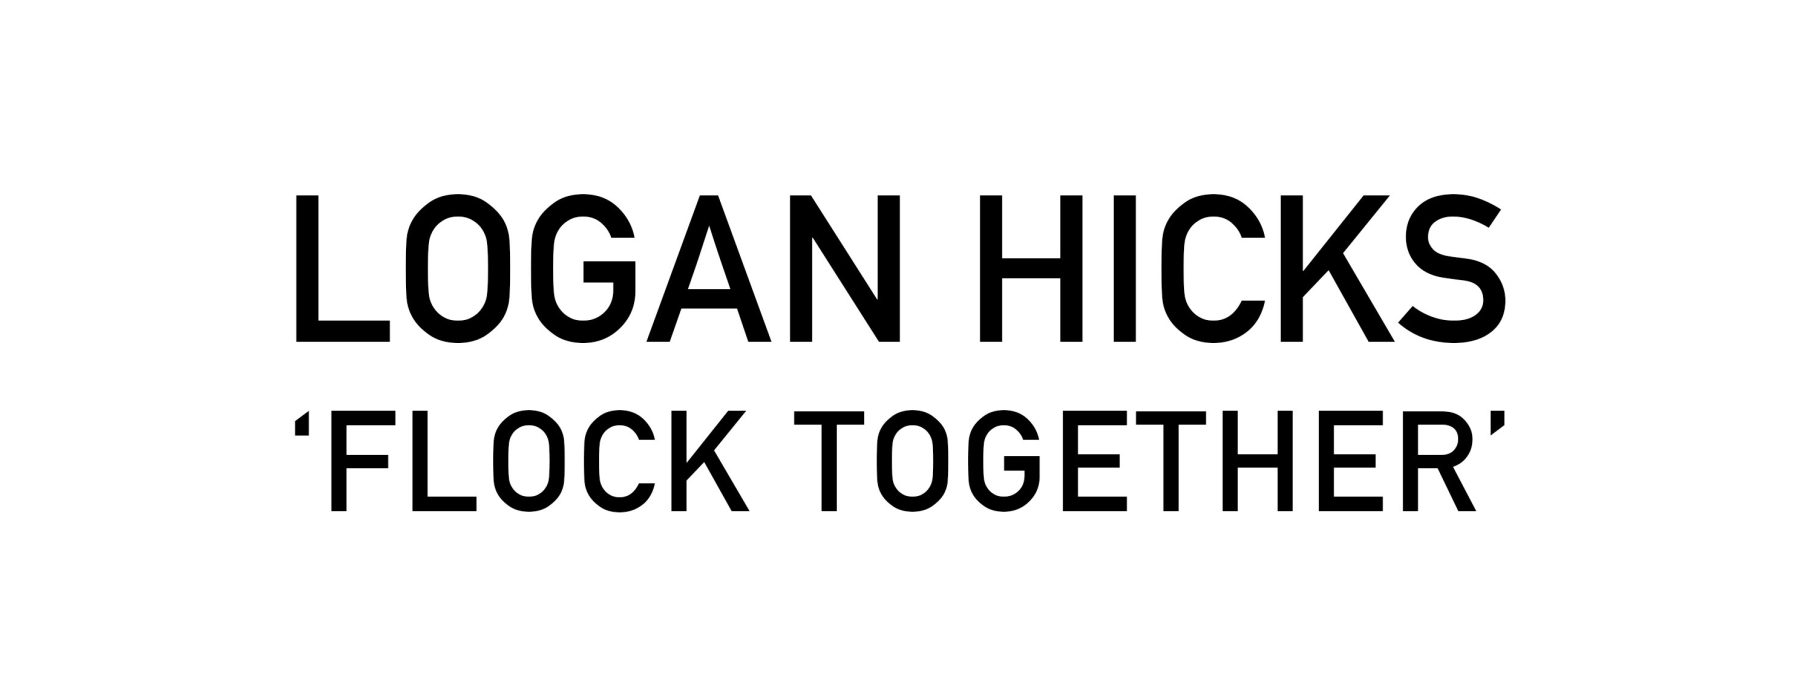 LOGAN HICKS